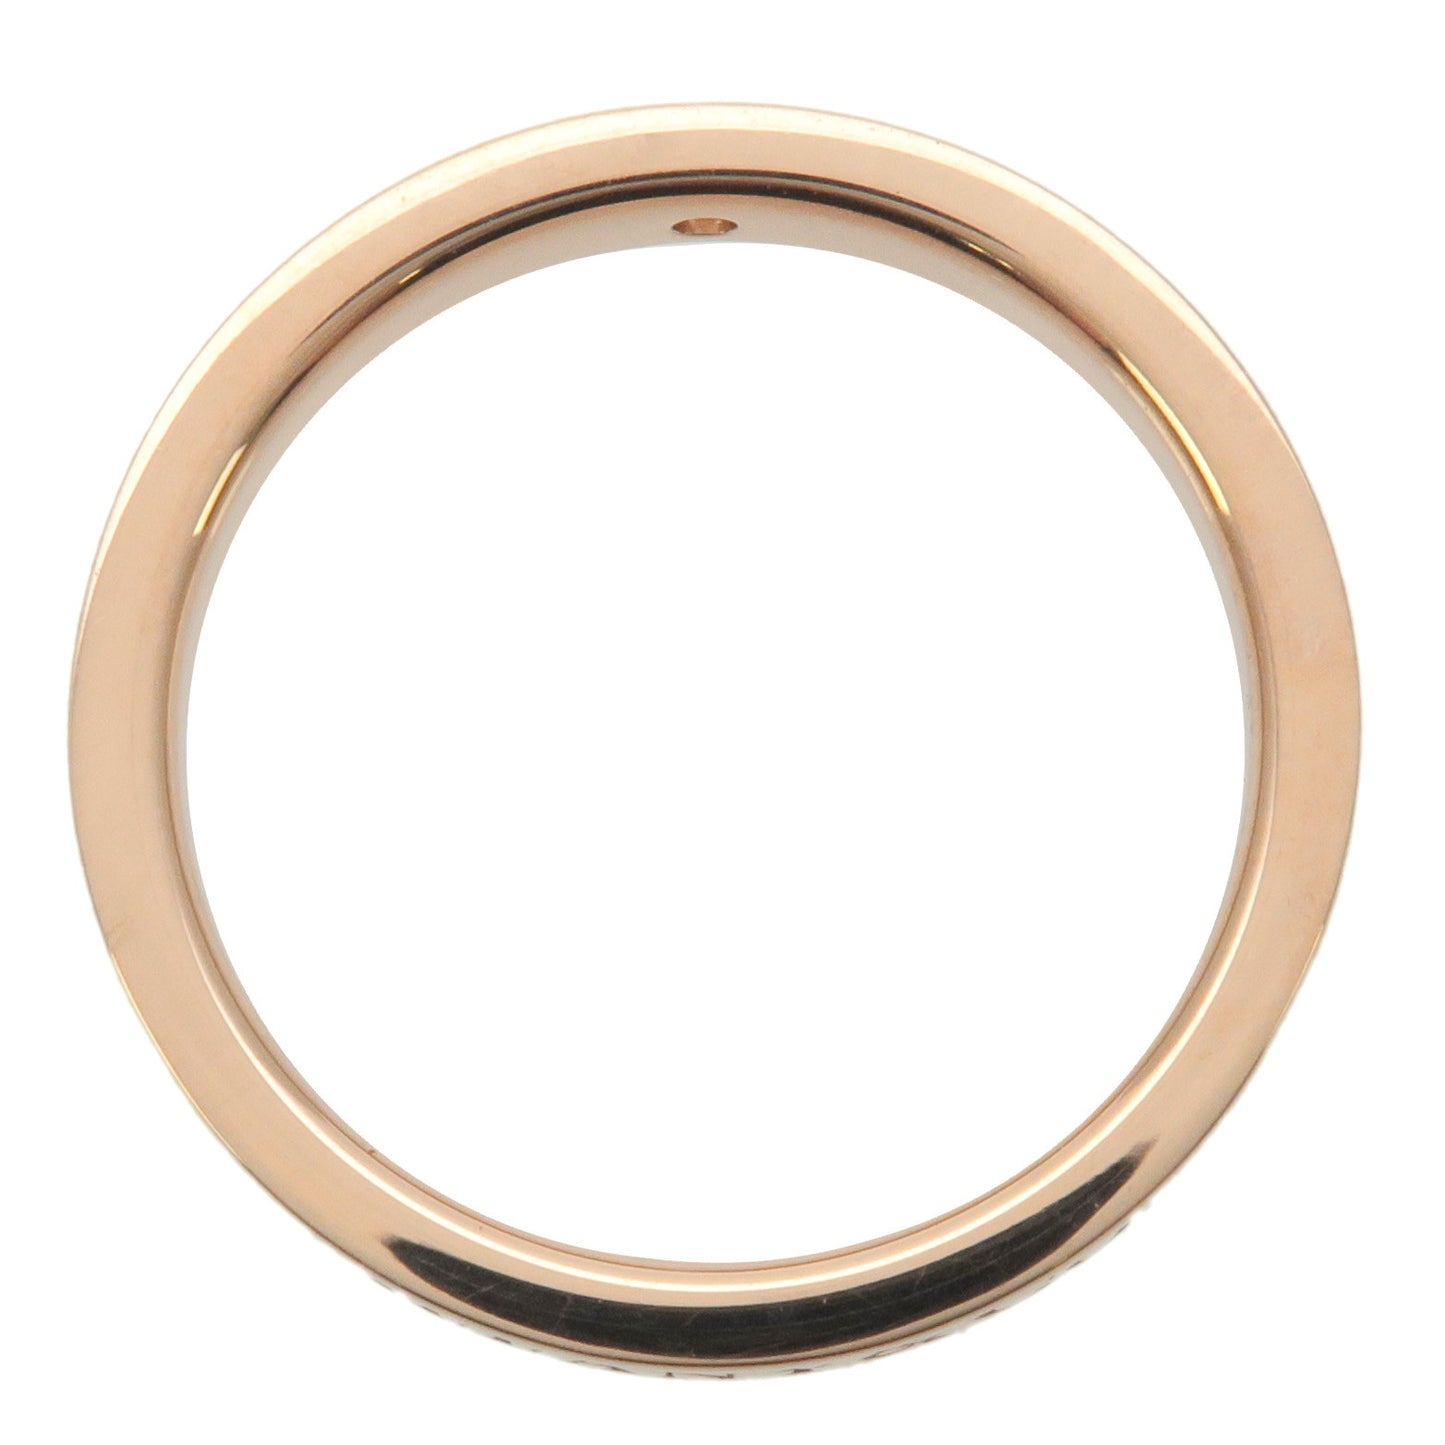 Tiffany&Co. Flat Band 3P Diamond Ring Rose Gold US4.5-5 EU49